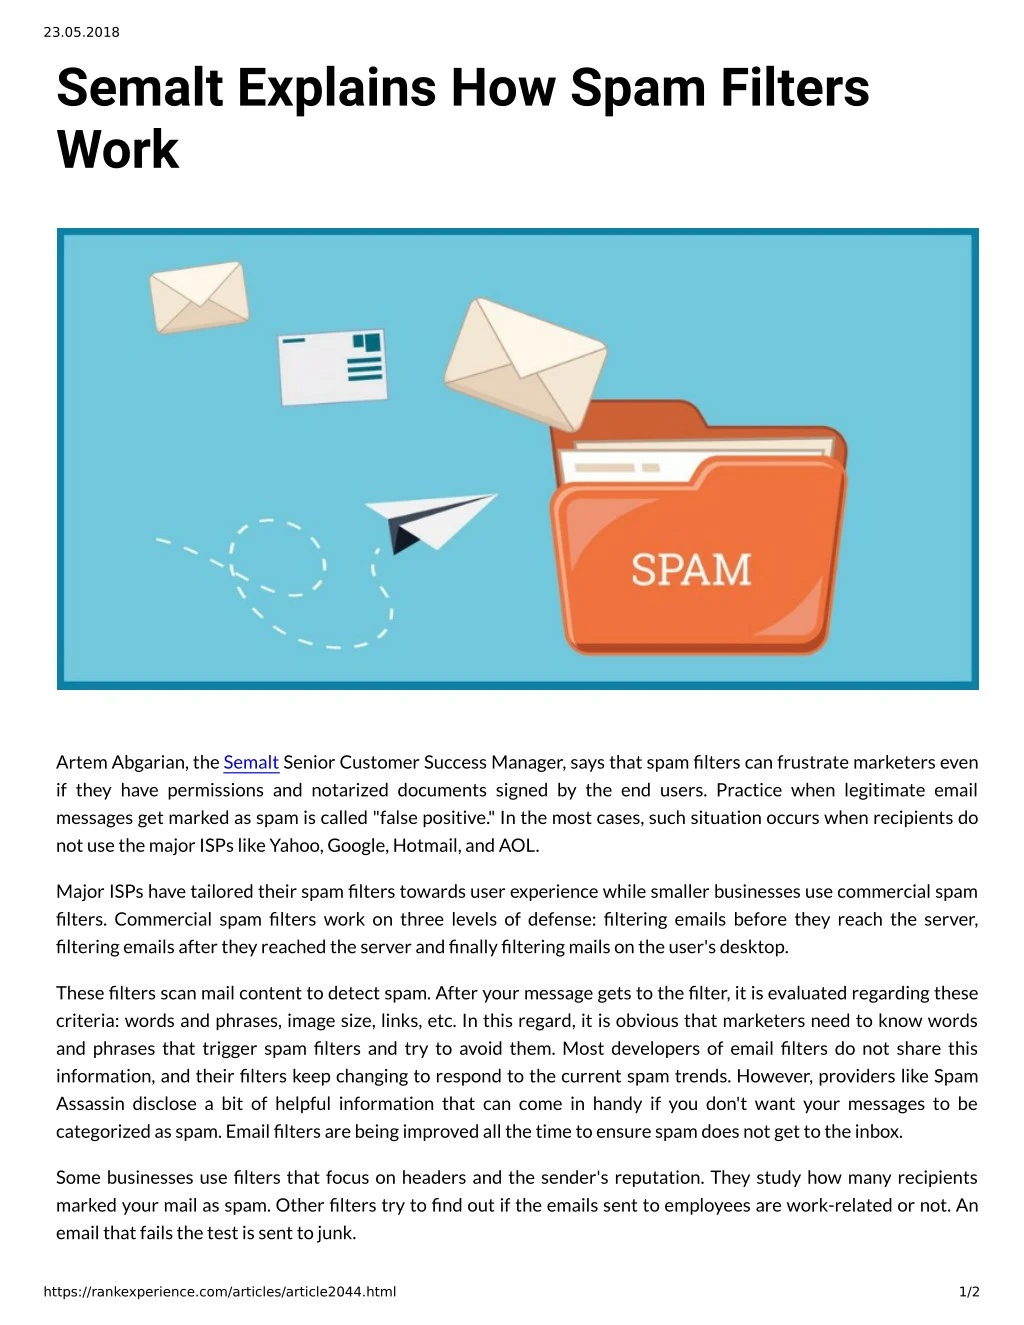 23 05 2018 semalt explains how spam filters work